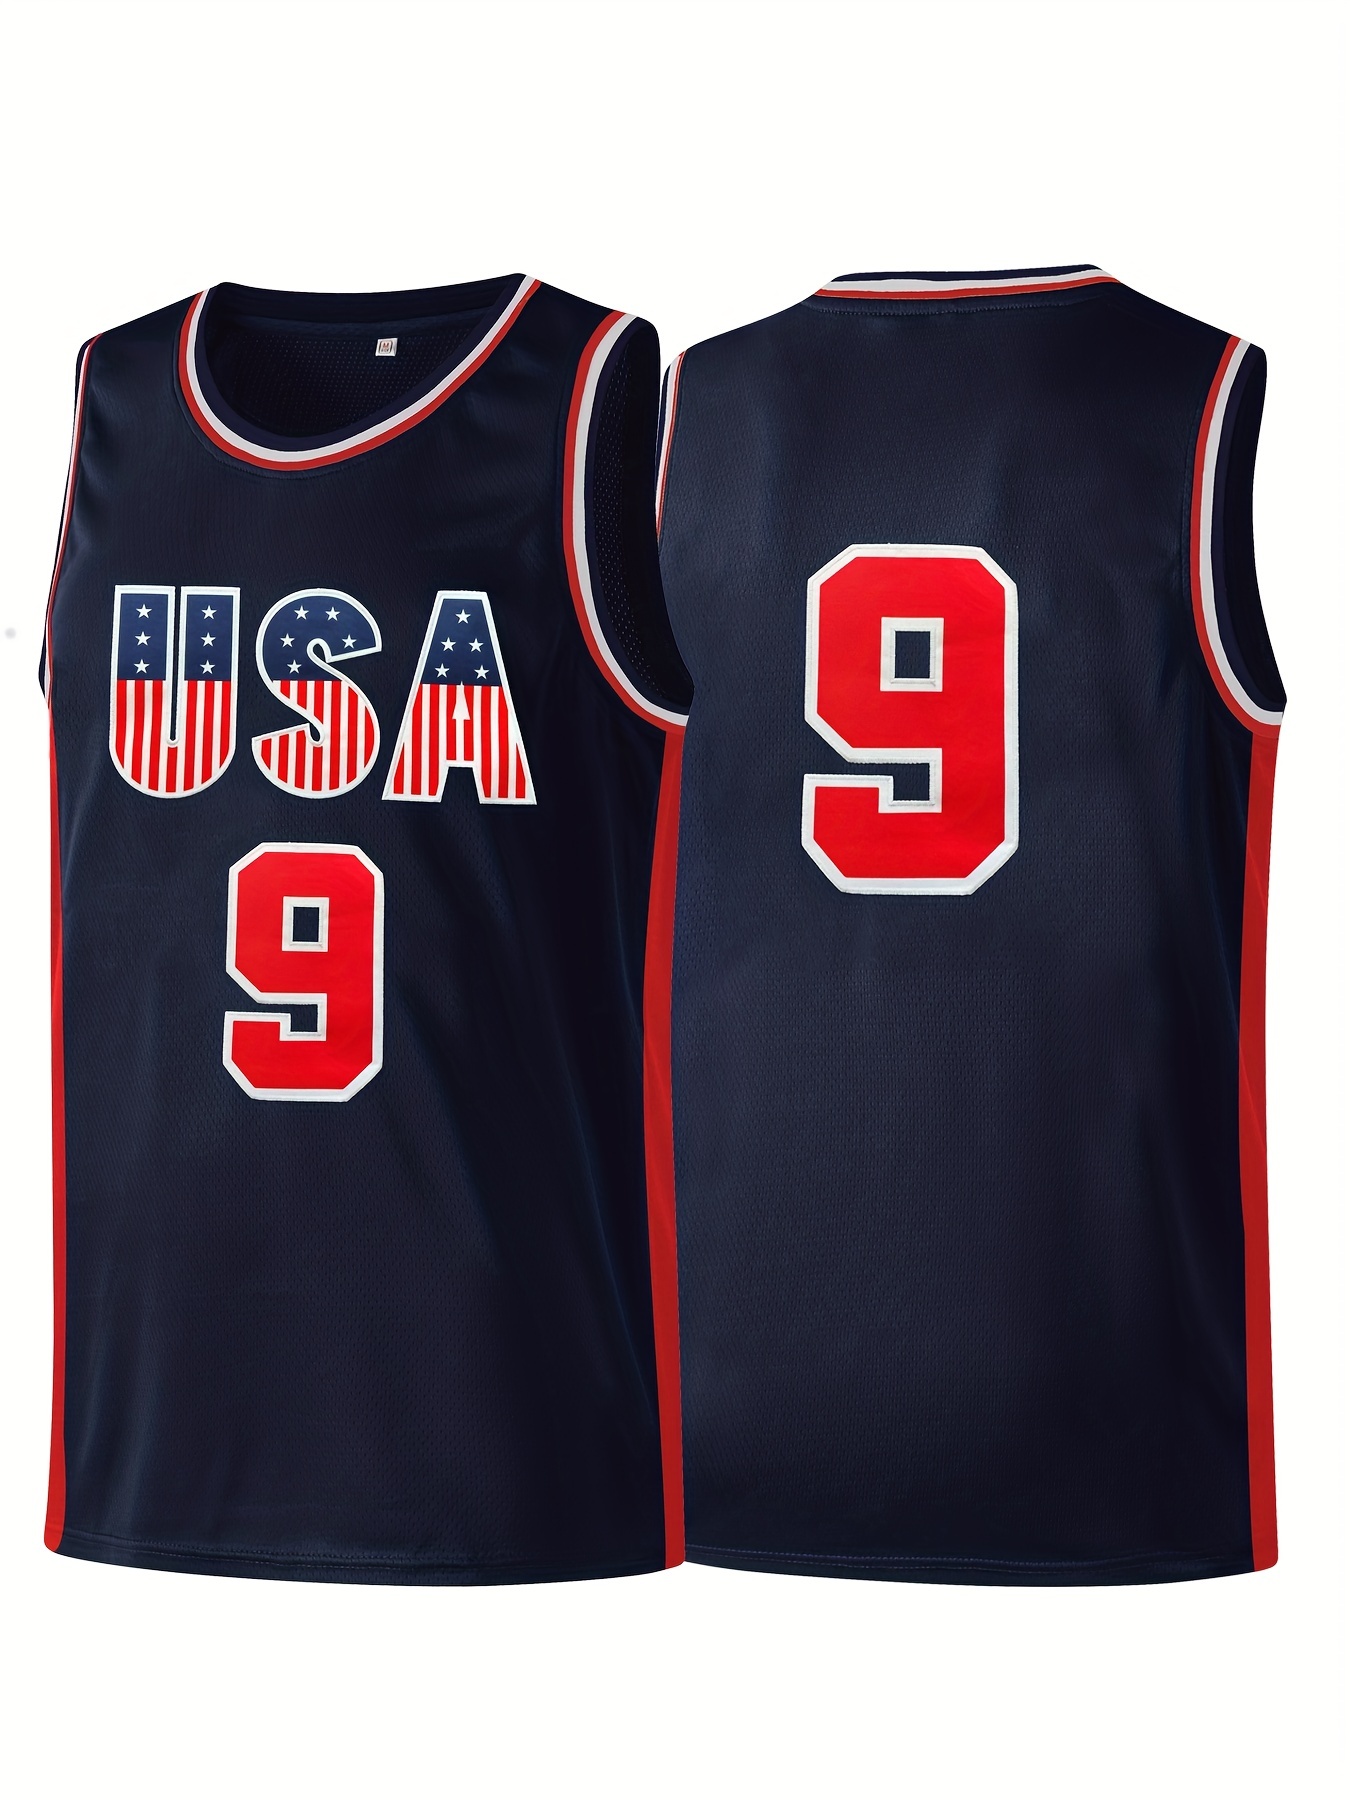 Men's Basketball Jeresy Black Mamba #8#24 Fans Jerseys 90S Hip Hop Fashion  Retro Stitched Basketball Jersey 